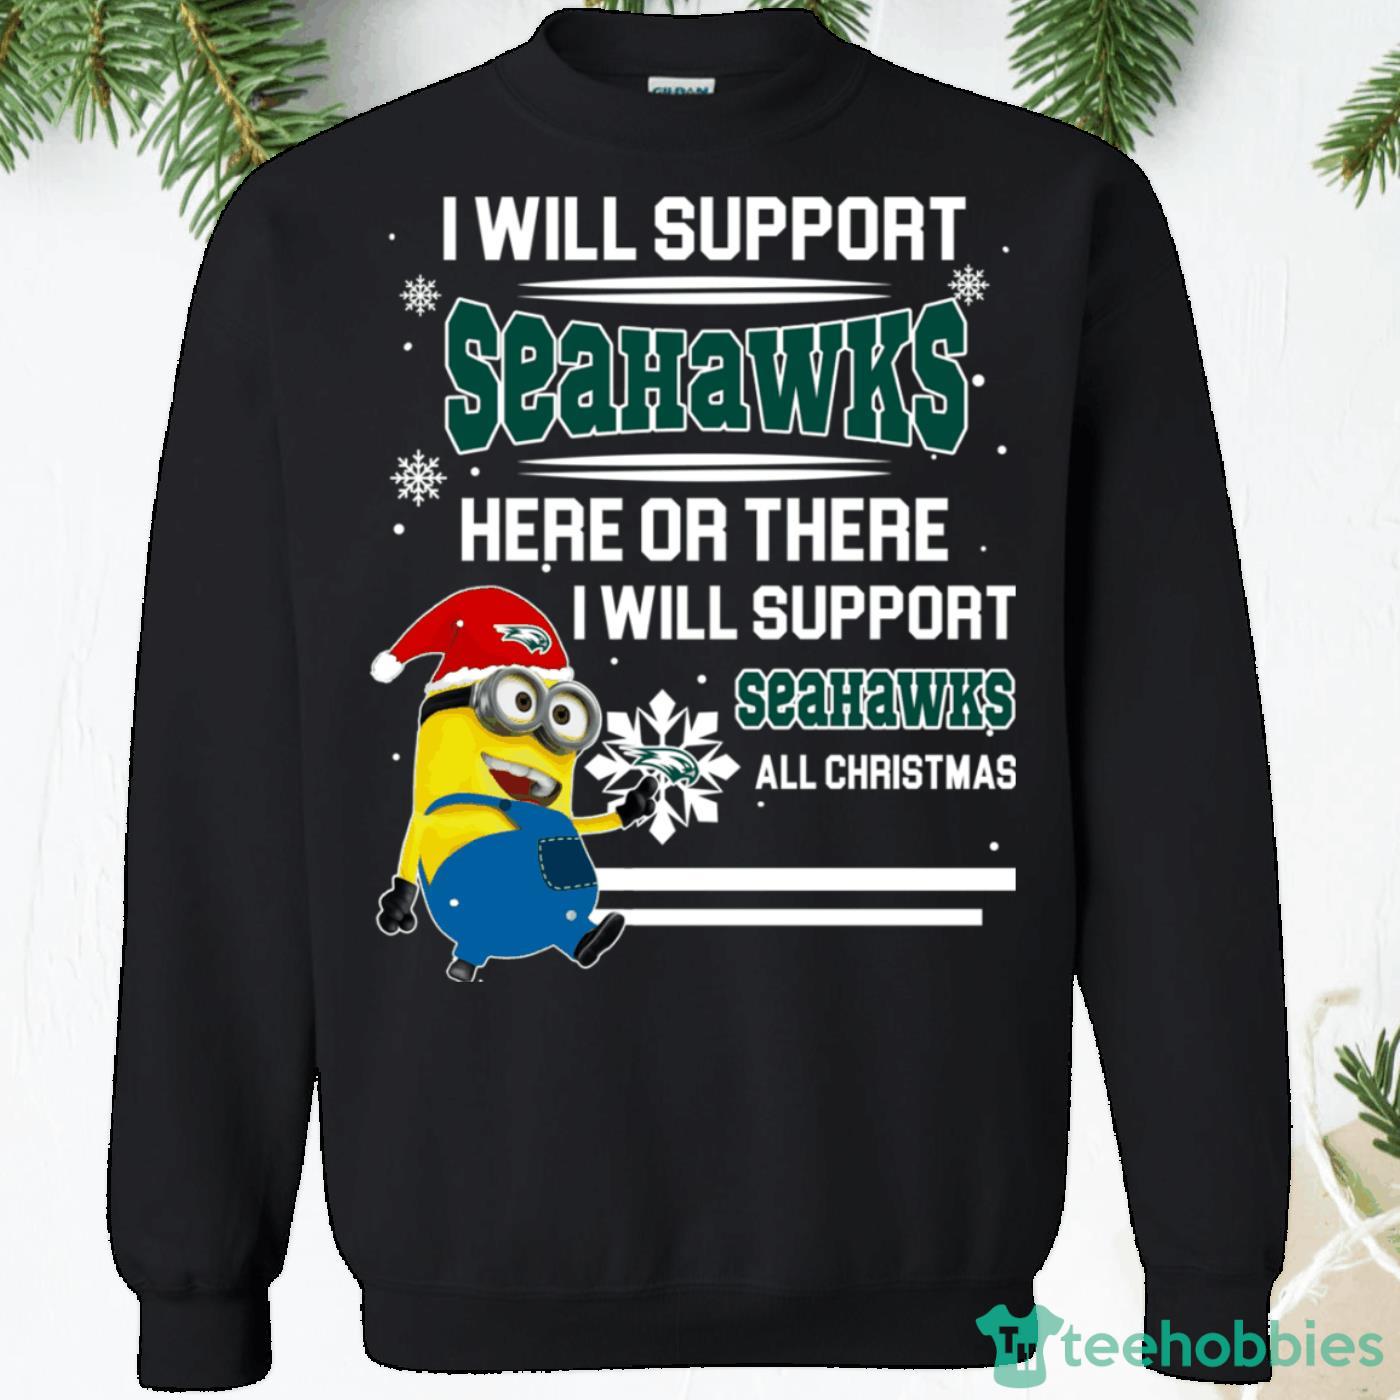 Seahawks Minion Christmas Sweatshirt - seahawks-minion-christmas-sweatshirt-1